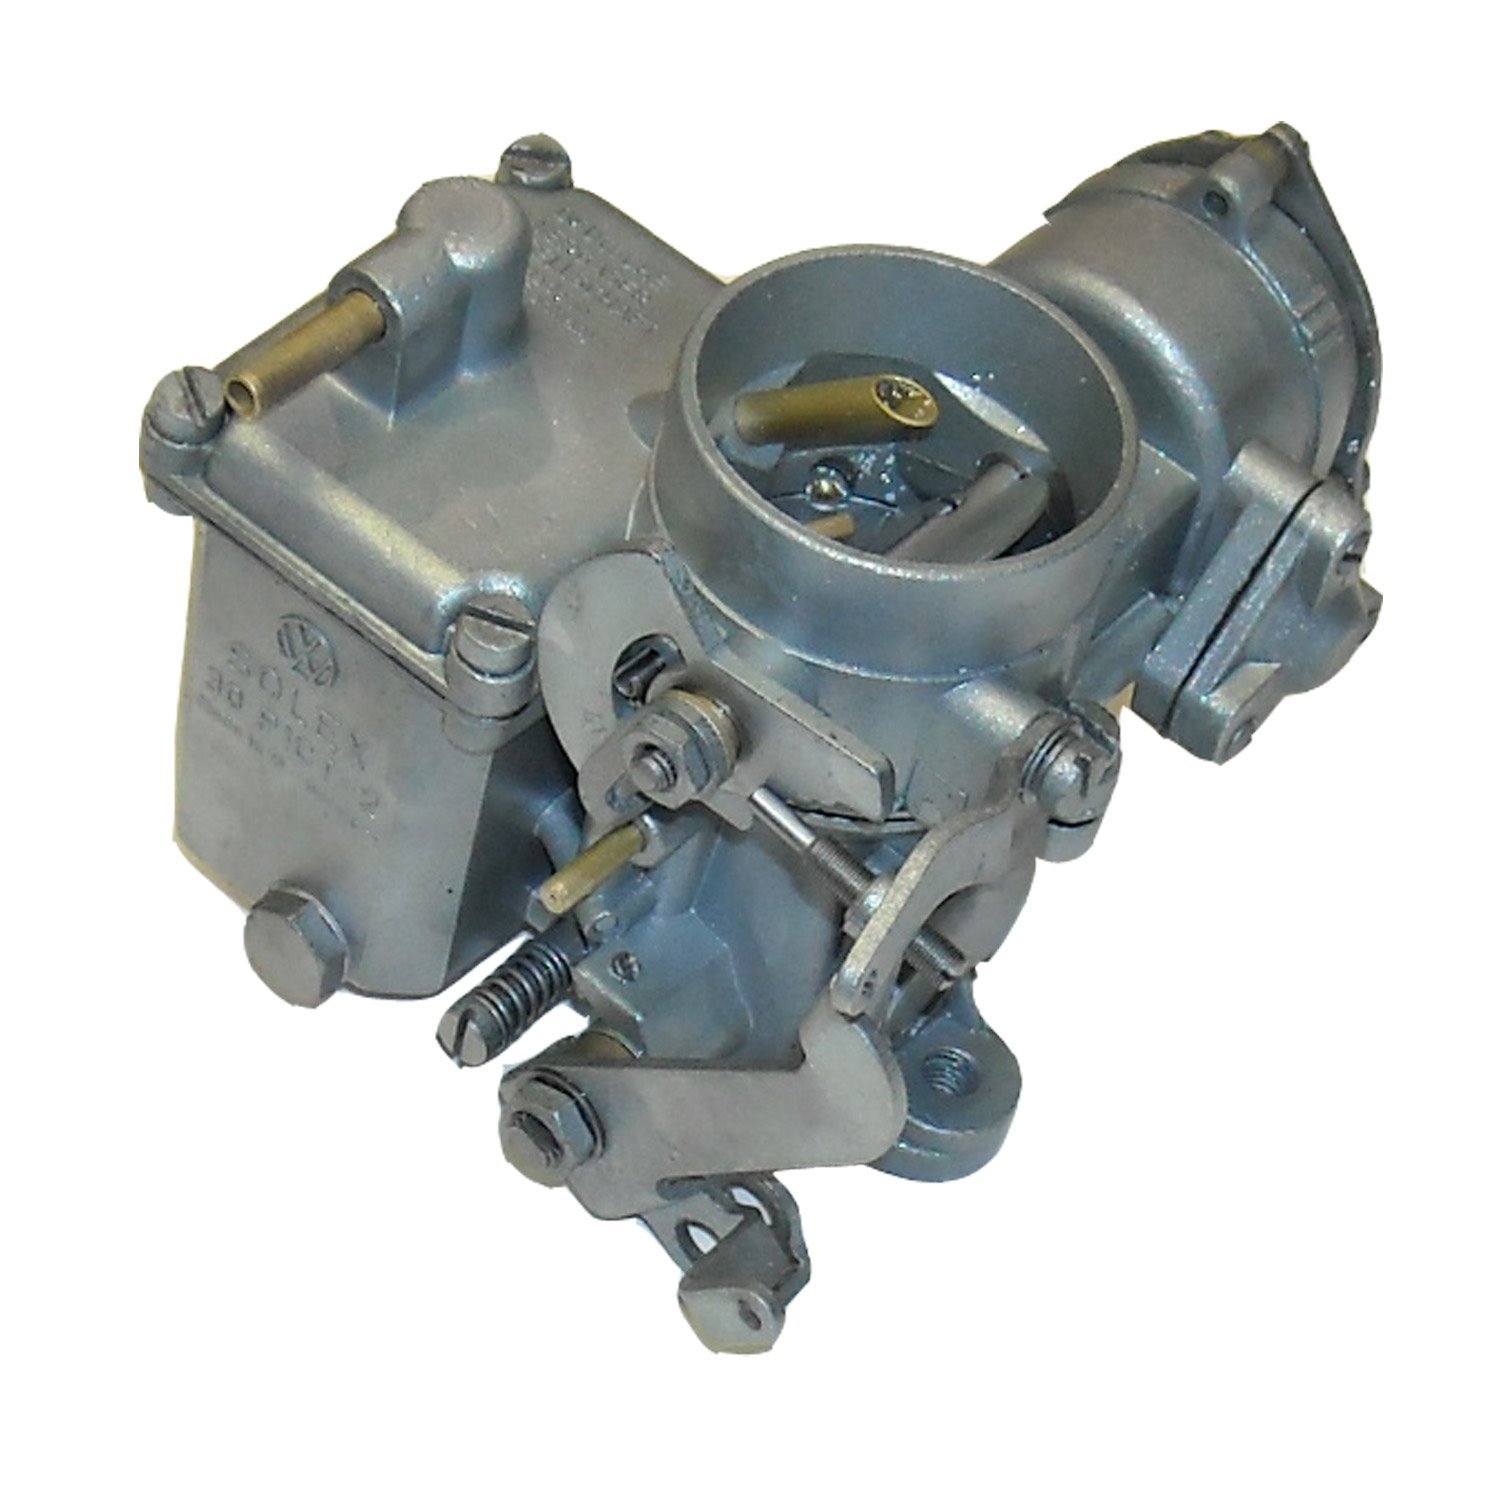 URC-V400 Solex Remanufactured Carburetor